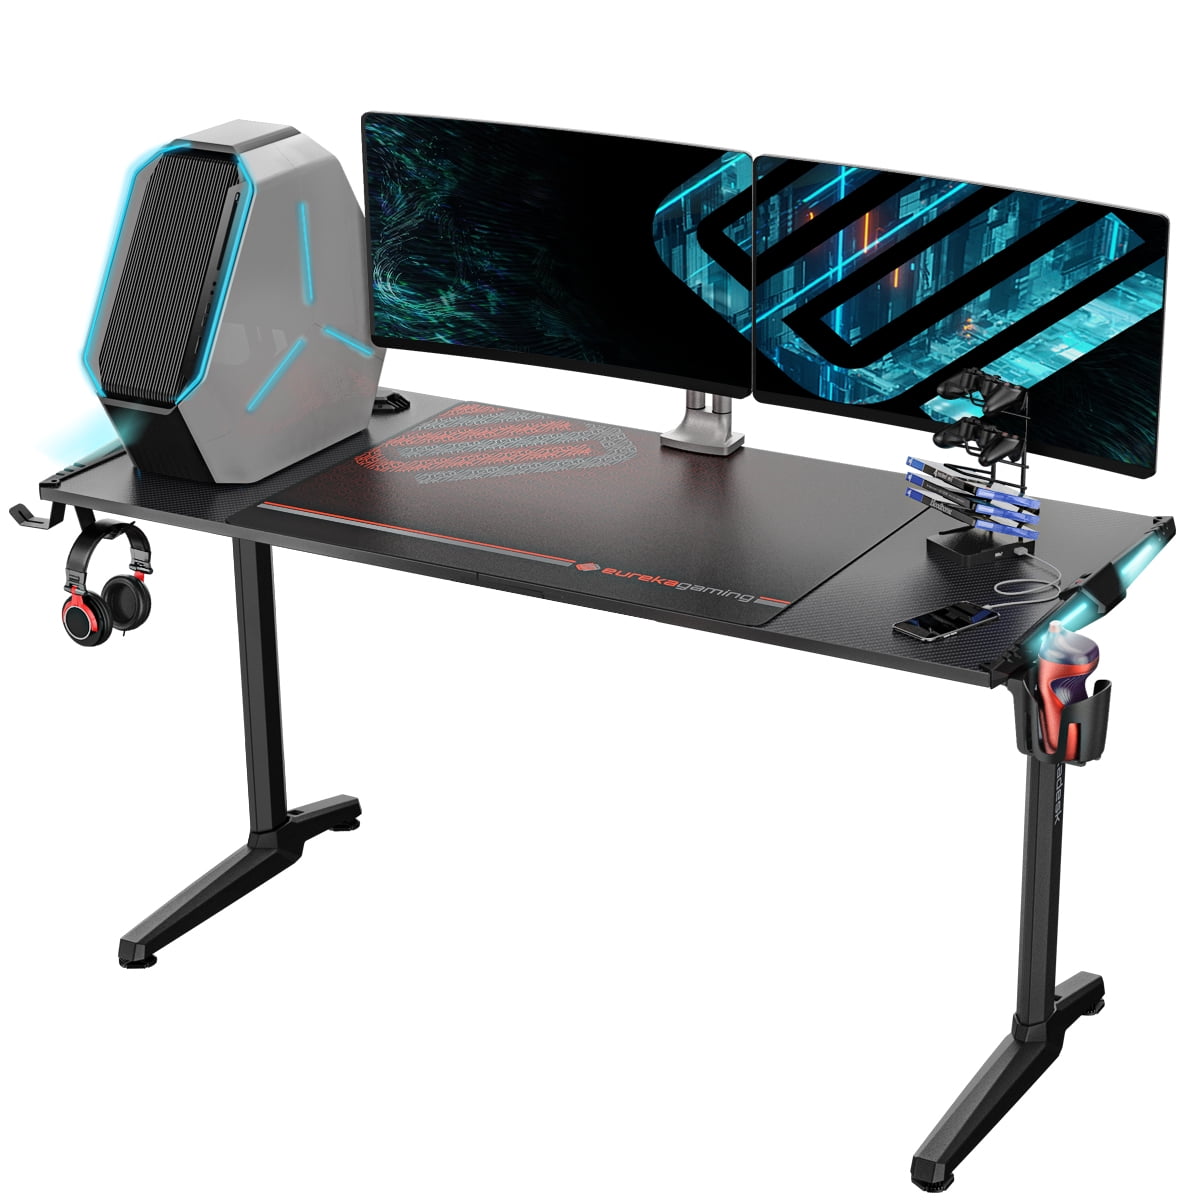 Eureka Black Gaming Desk with Gaming Room Accessories Set